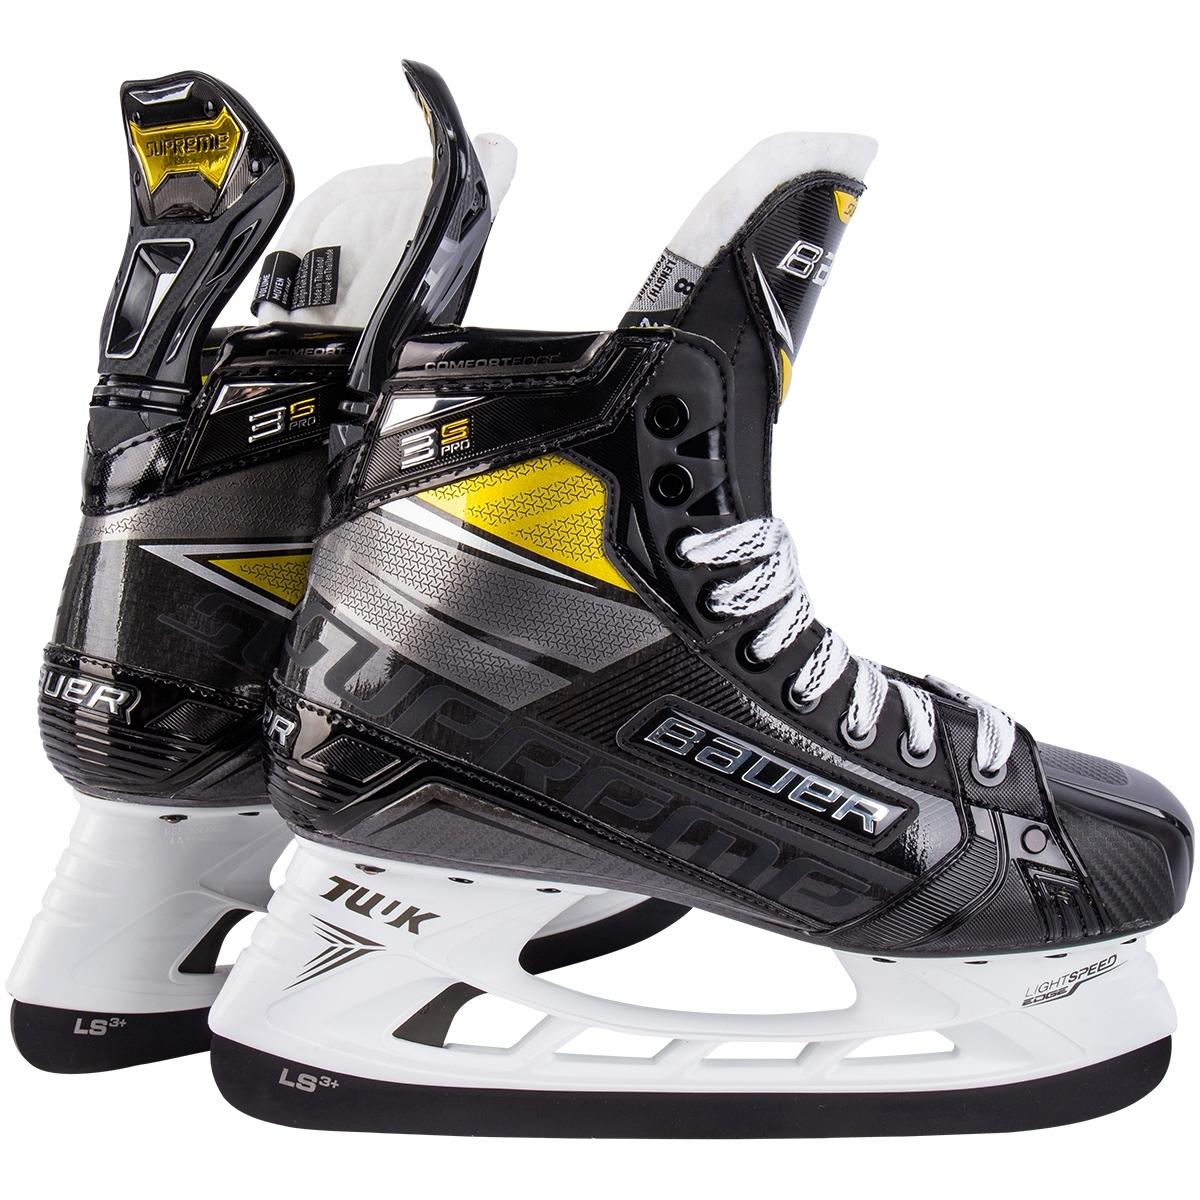 Bauer Supreme 3S Pro Jr. Hockey Skatesproduct zoom image #1